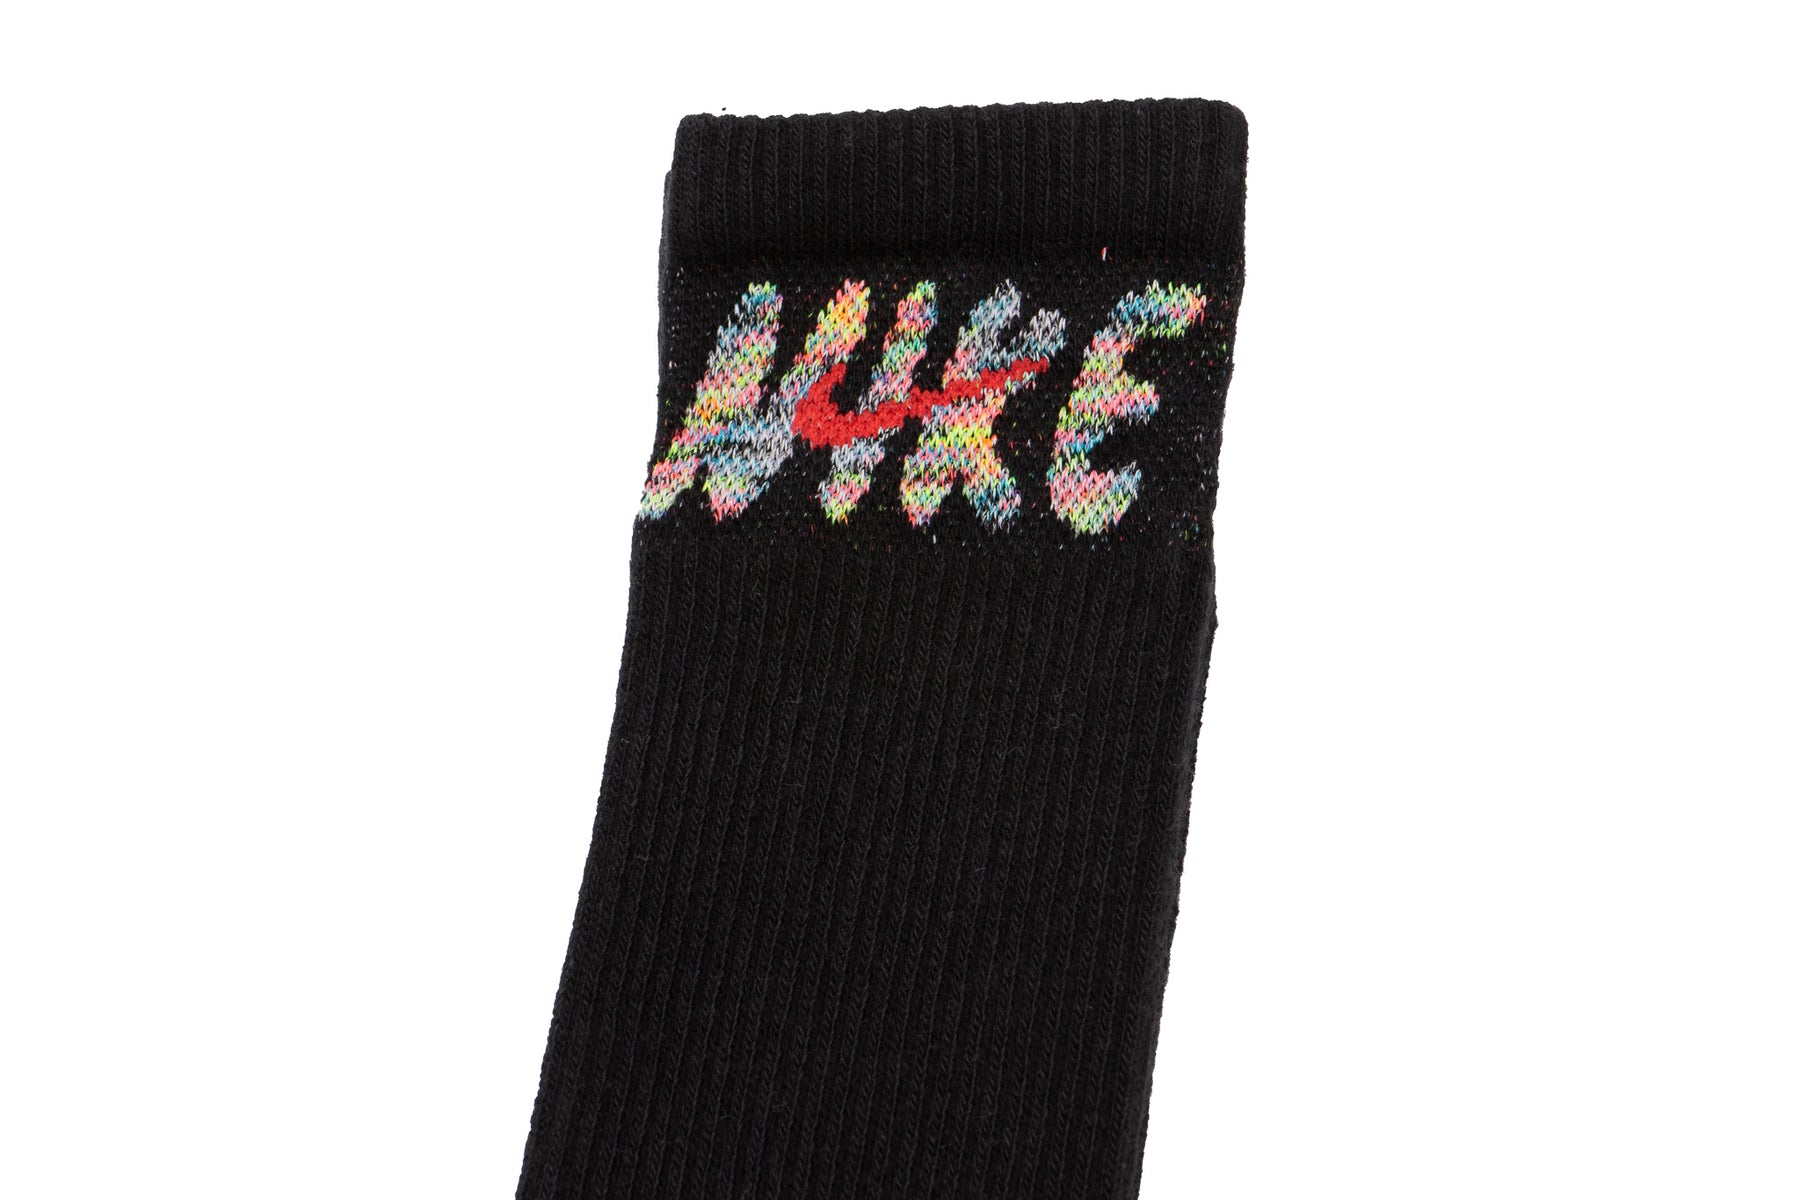 Nike Everyday Plus Cushioned Socks "Multi-Color"